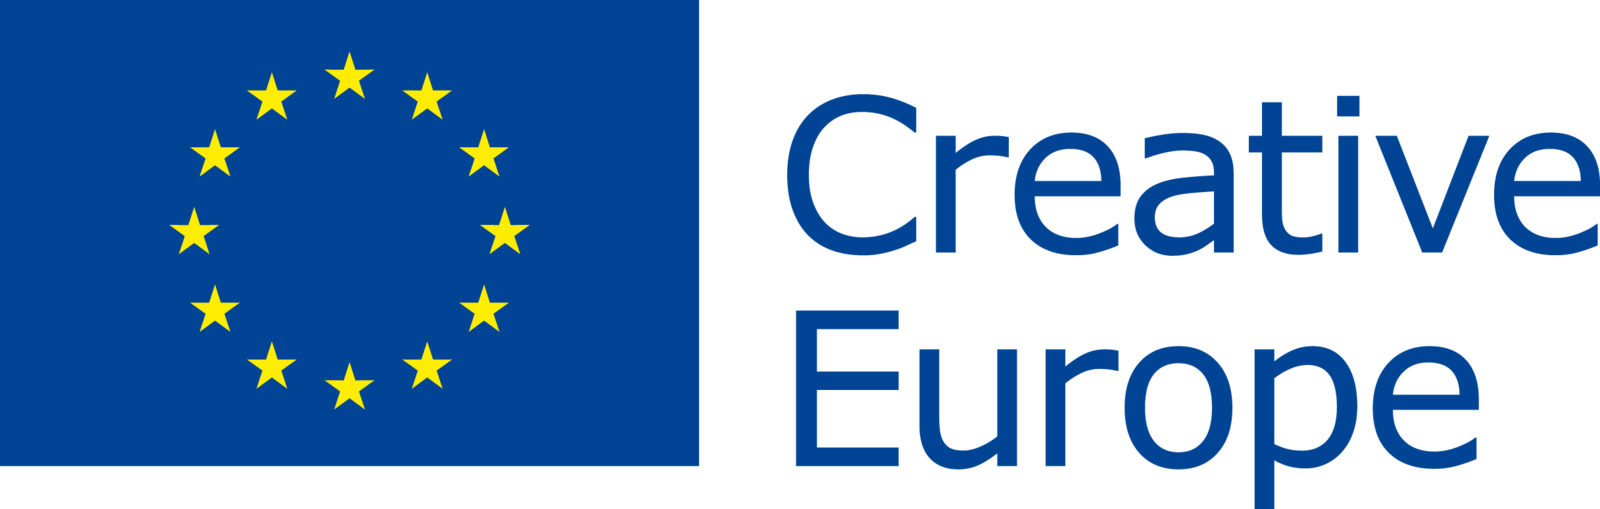 Creative Europe - Brexit Box